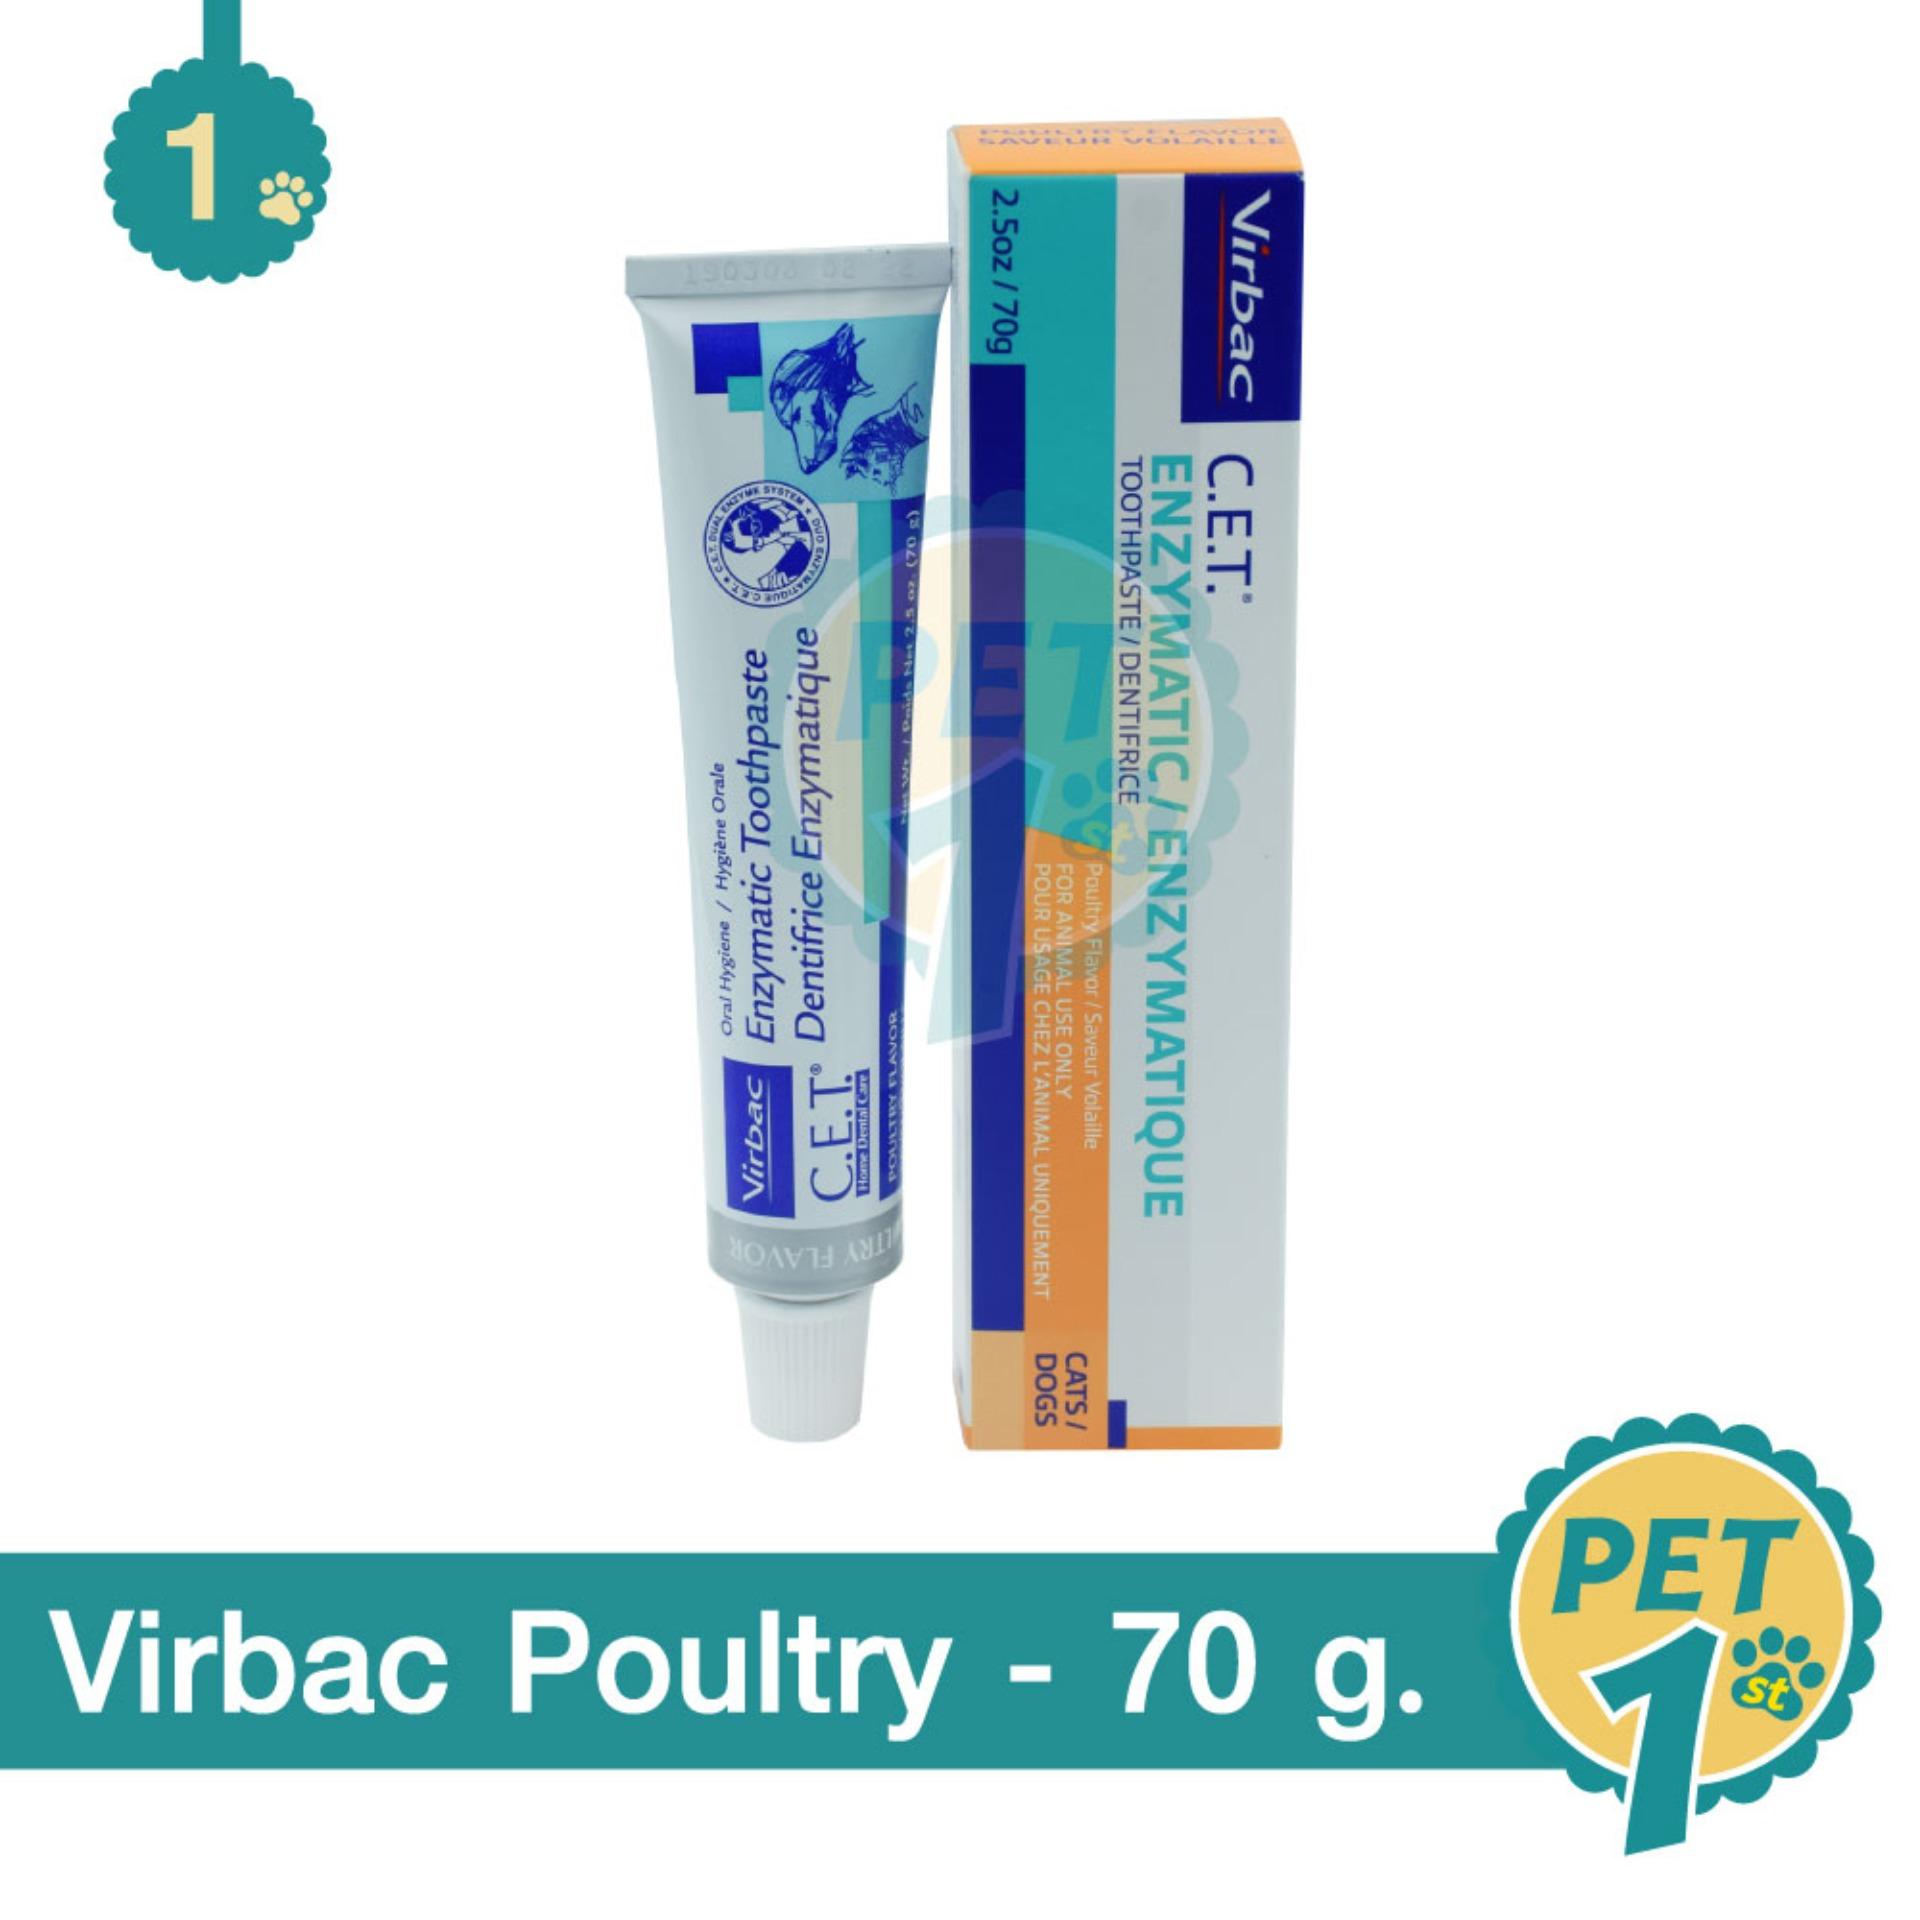 Virbac C.E.T Poultry ยาสีฟัน รสไก่ สำหรับสุนัขและแมว 70 กรัม